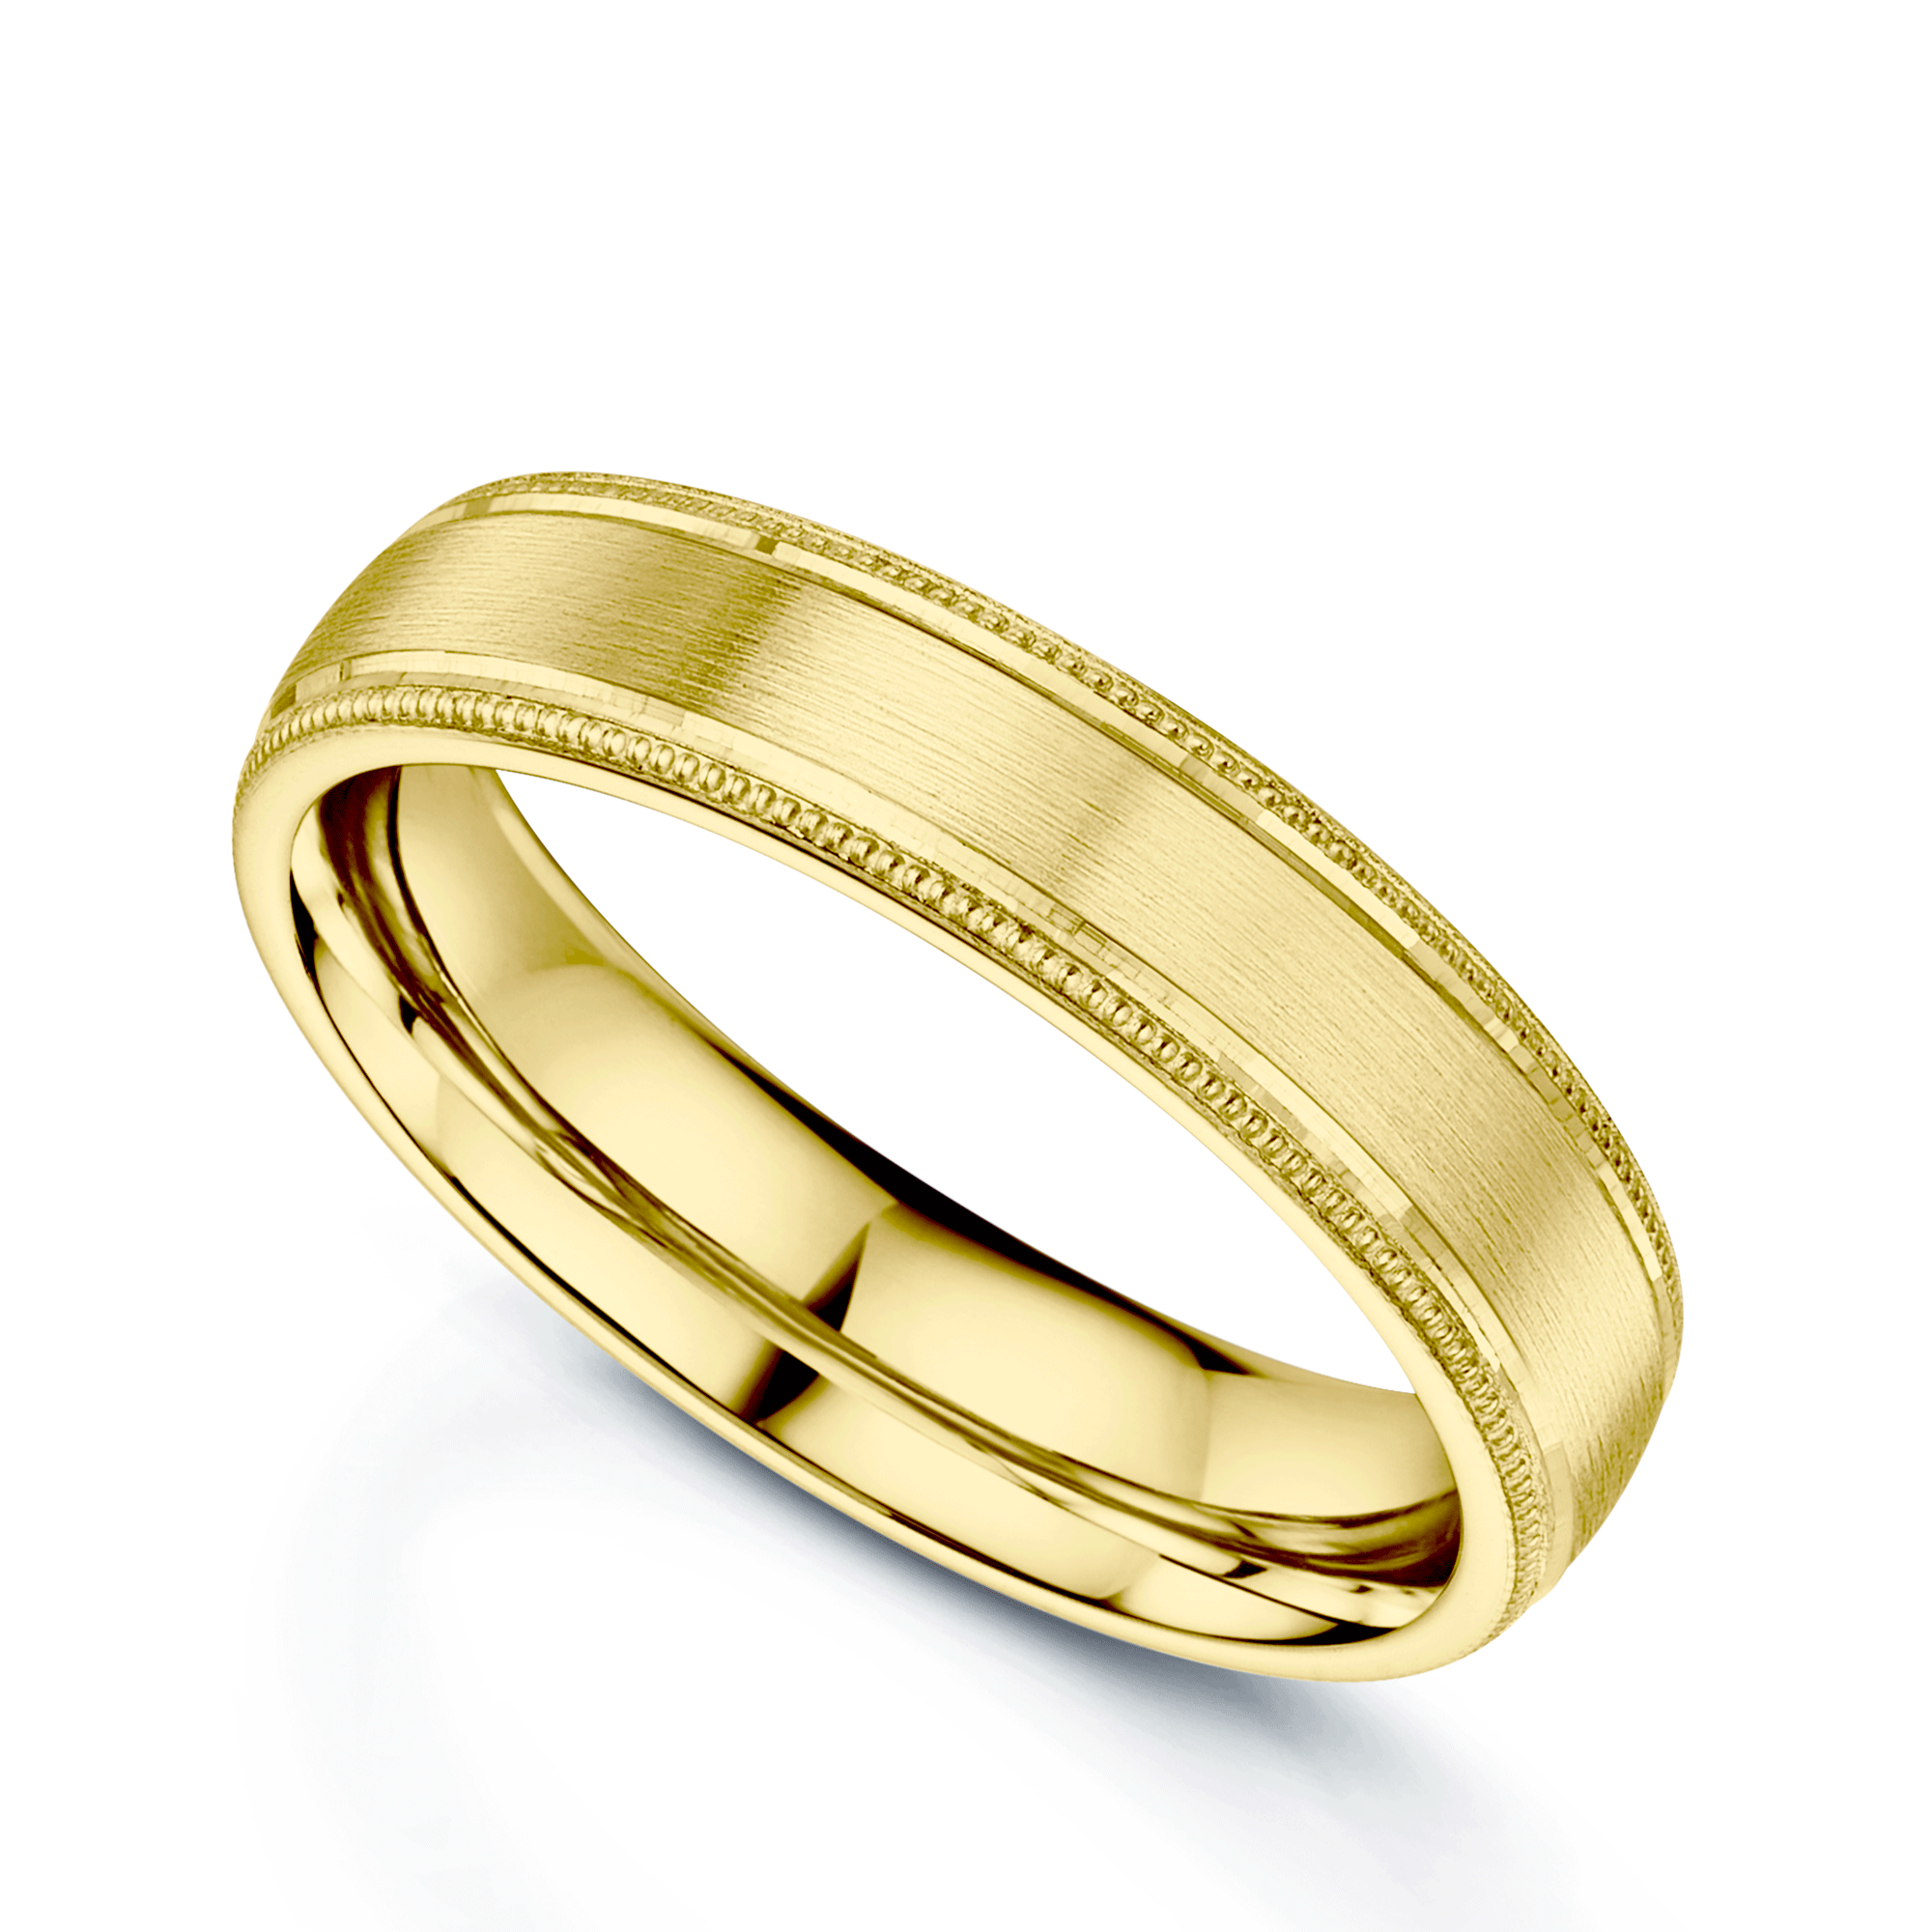 18ct Yellow Gold Matt Court Shape Wedding Ring with Polished & Millgrain Edges